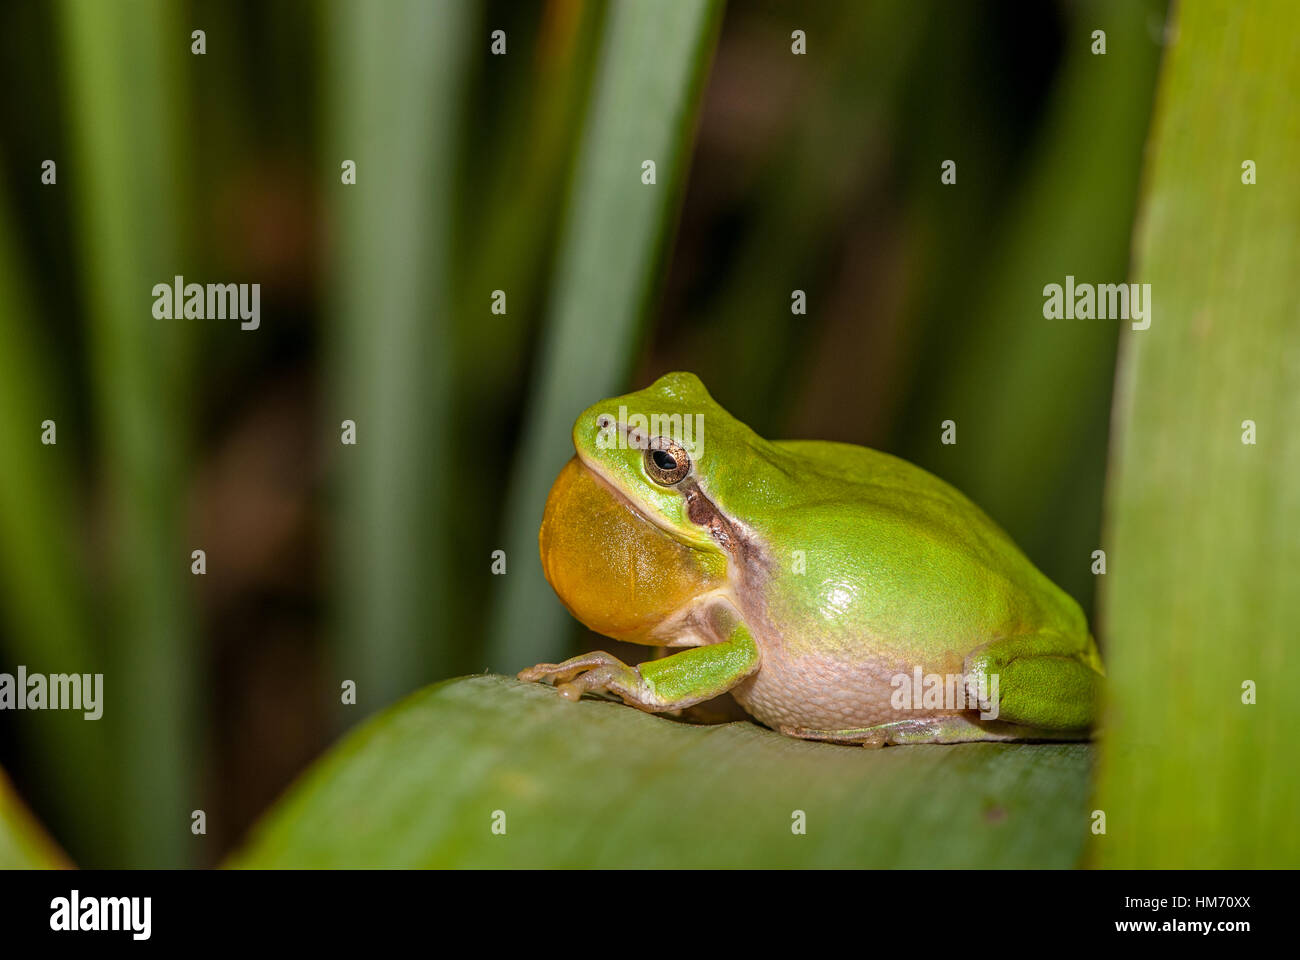 Mediterranean tree frog (Hyla meridionalis) on a green leaf, Santpedor, Barcelona, Catalonia Stock Photo